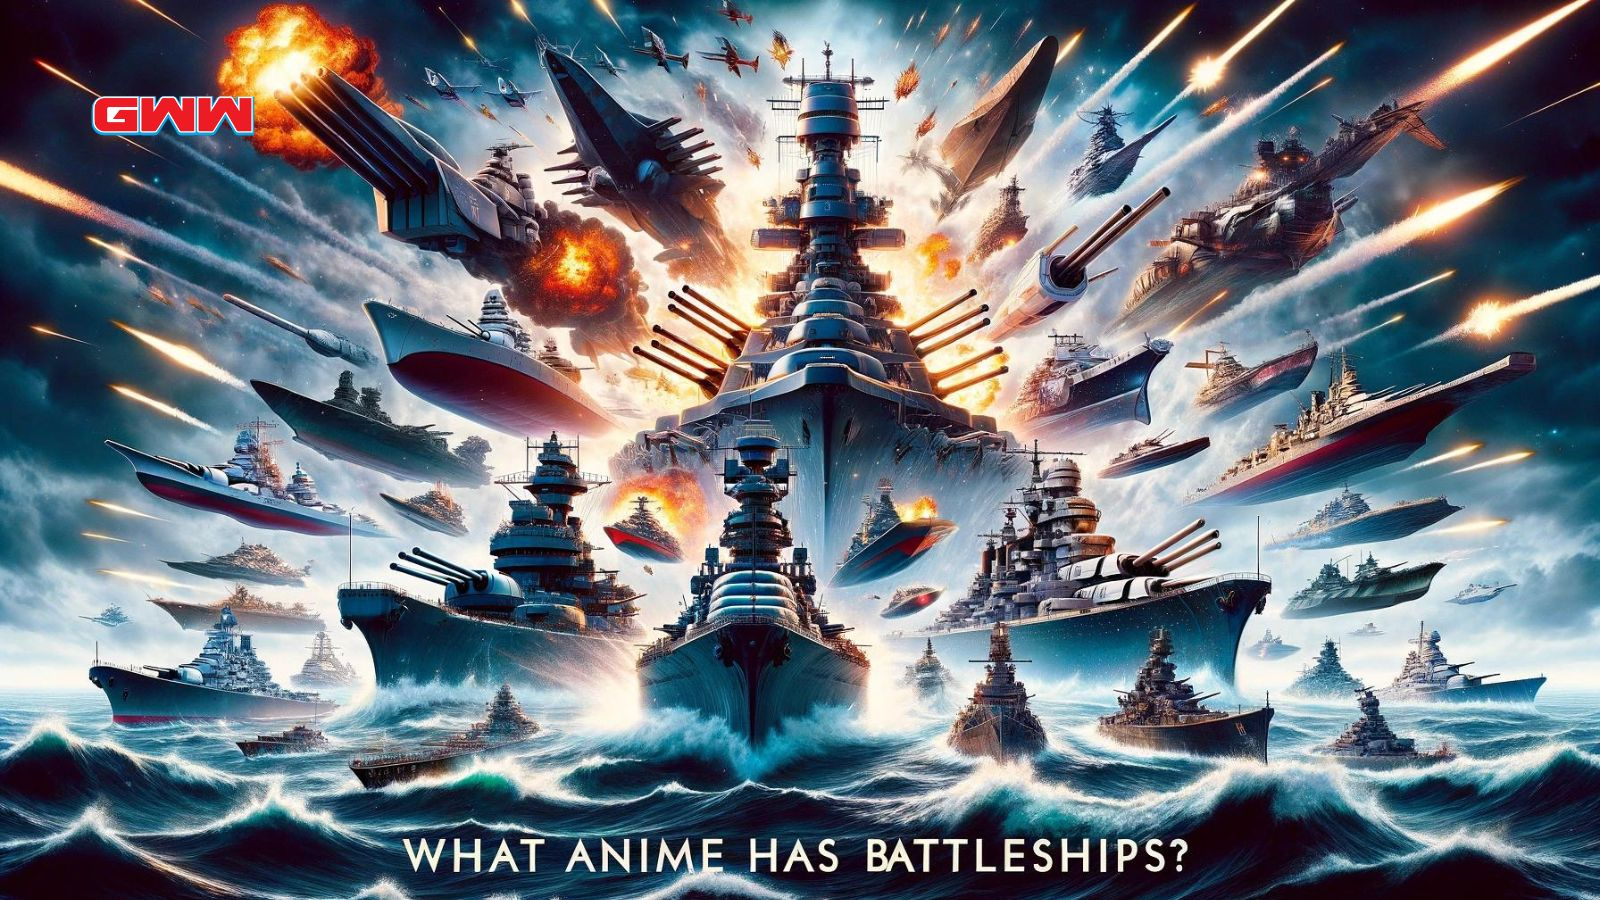 Anime battleships engaged in an intense battle